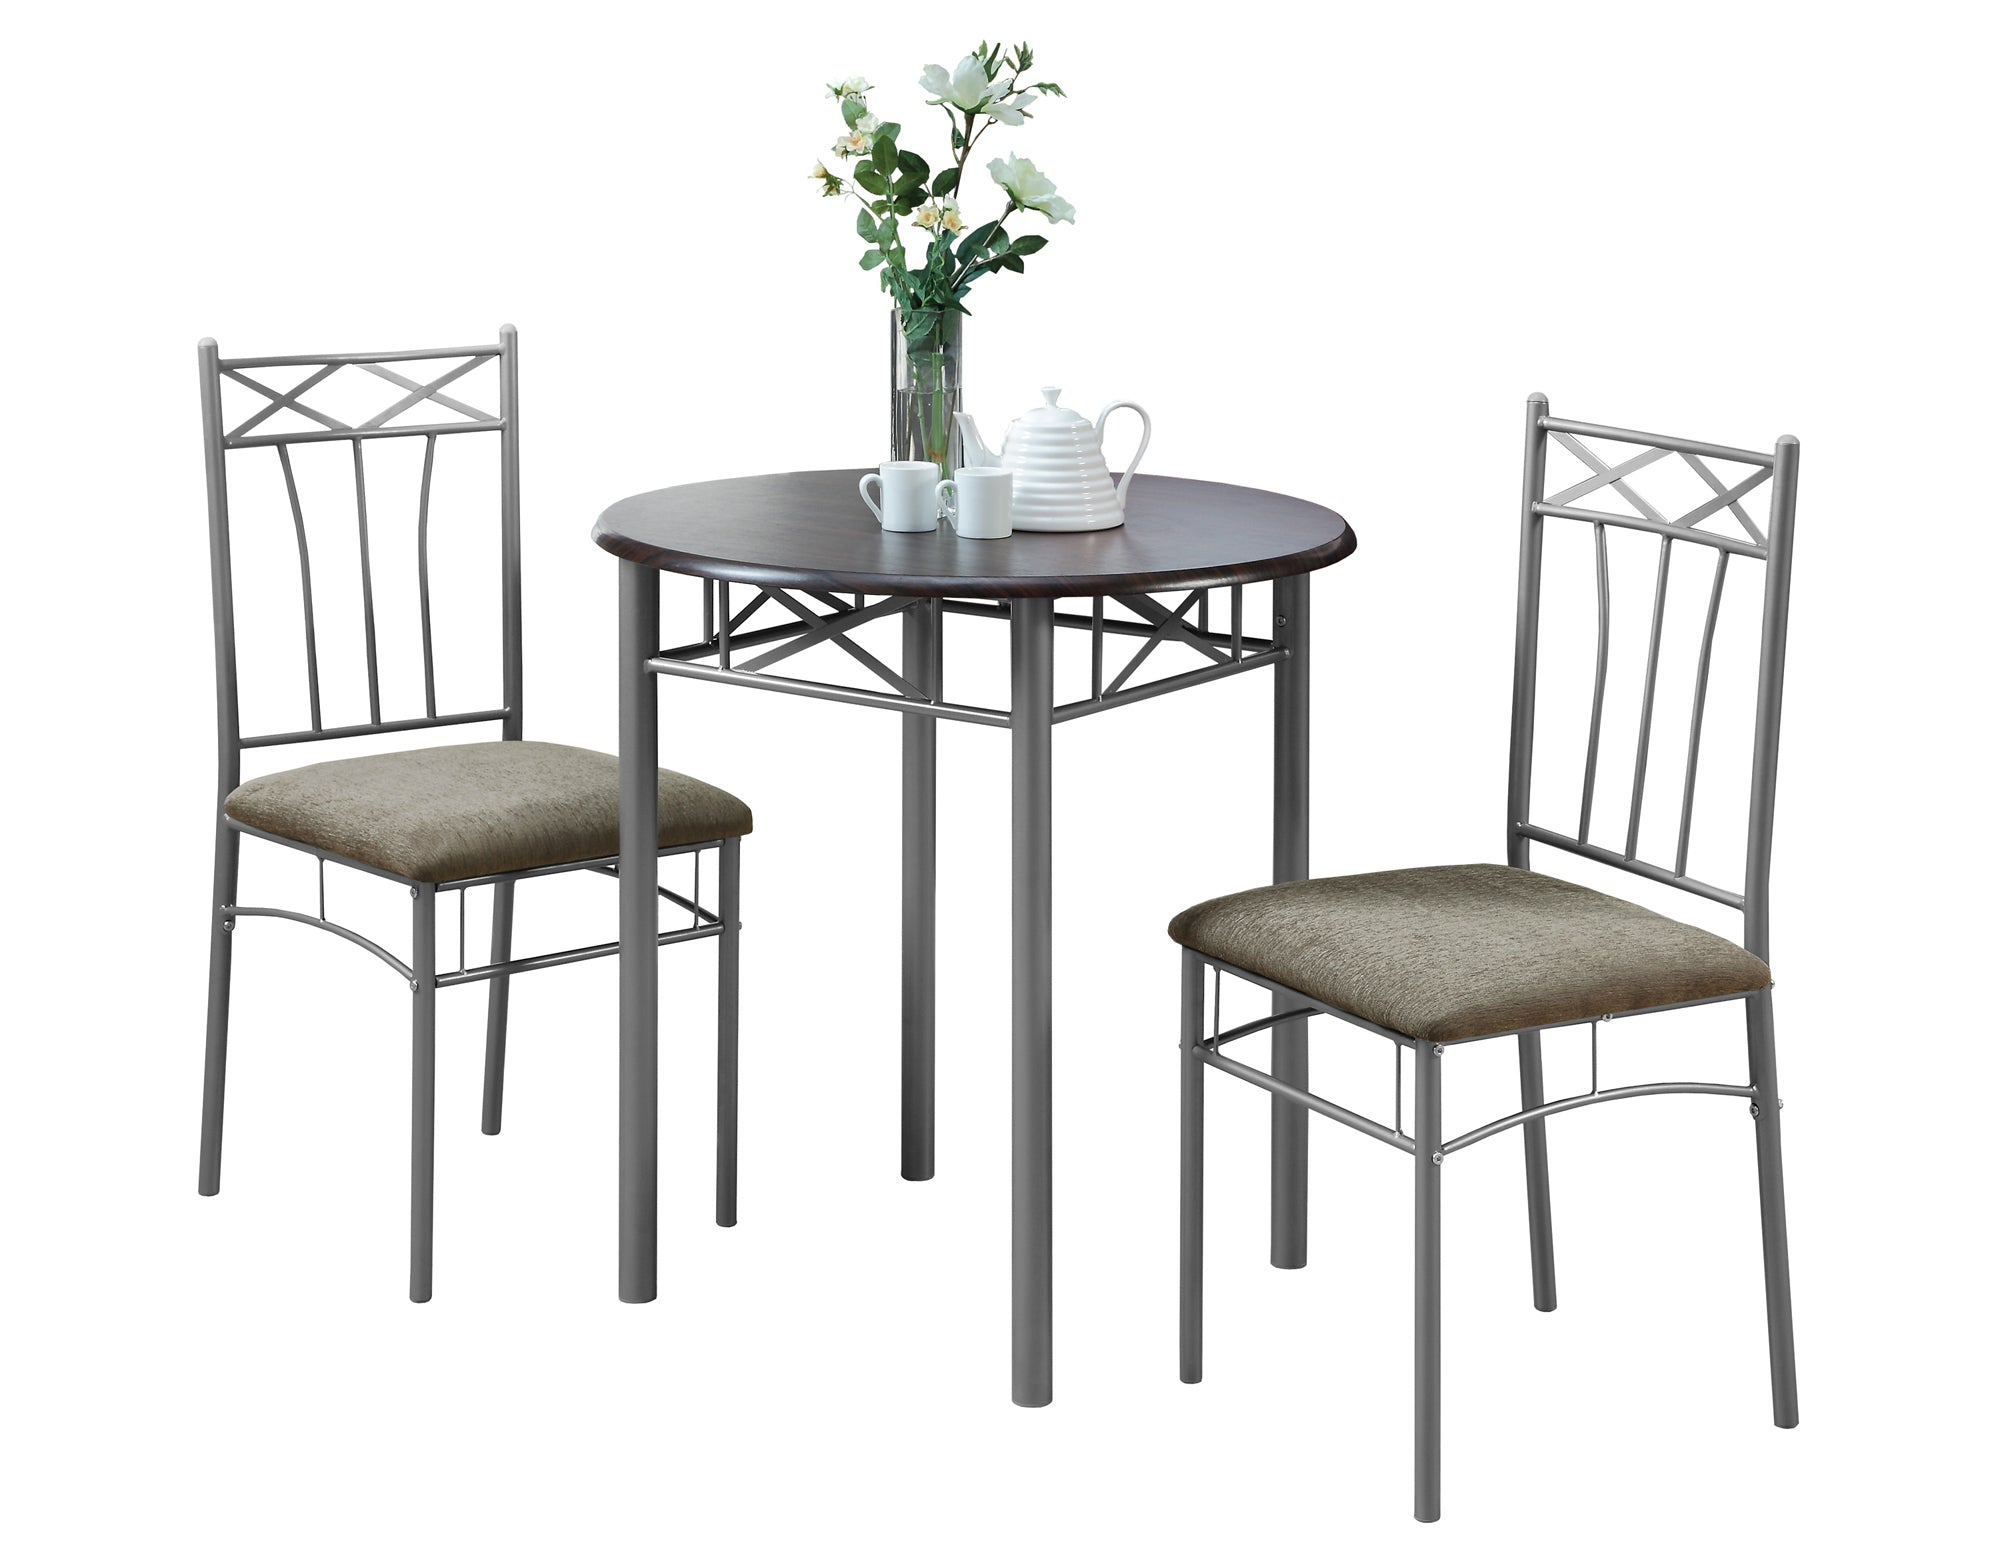 MN-153075    Dining Table Set, 3Pcs Set, Metal, Small, 30" Round, Kitchen, Metal, Laminate, Dark Brown, Grey, Contemporary, Modern